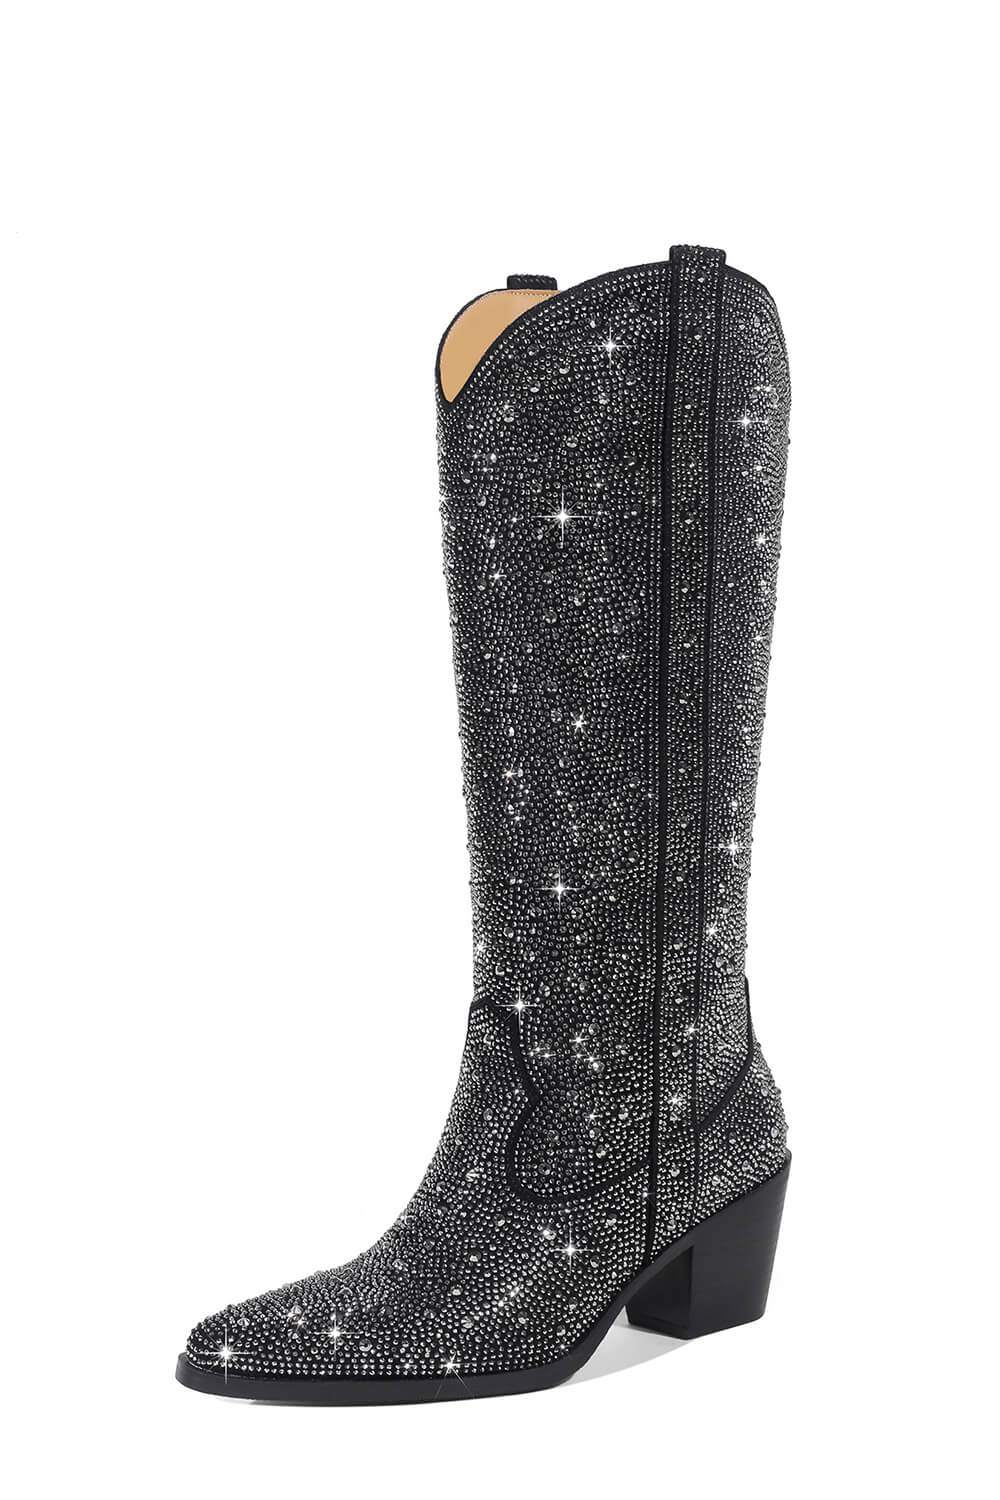 Rhinestones Embellished Western Cowboy Mid-Calf Pointed Toe Block Heeled Boots - Black